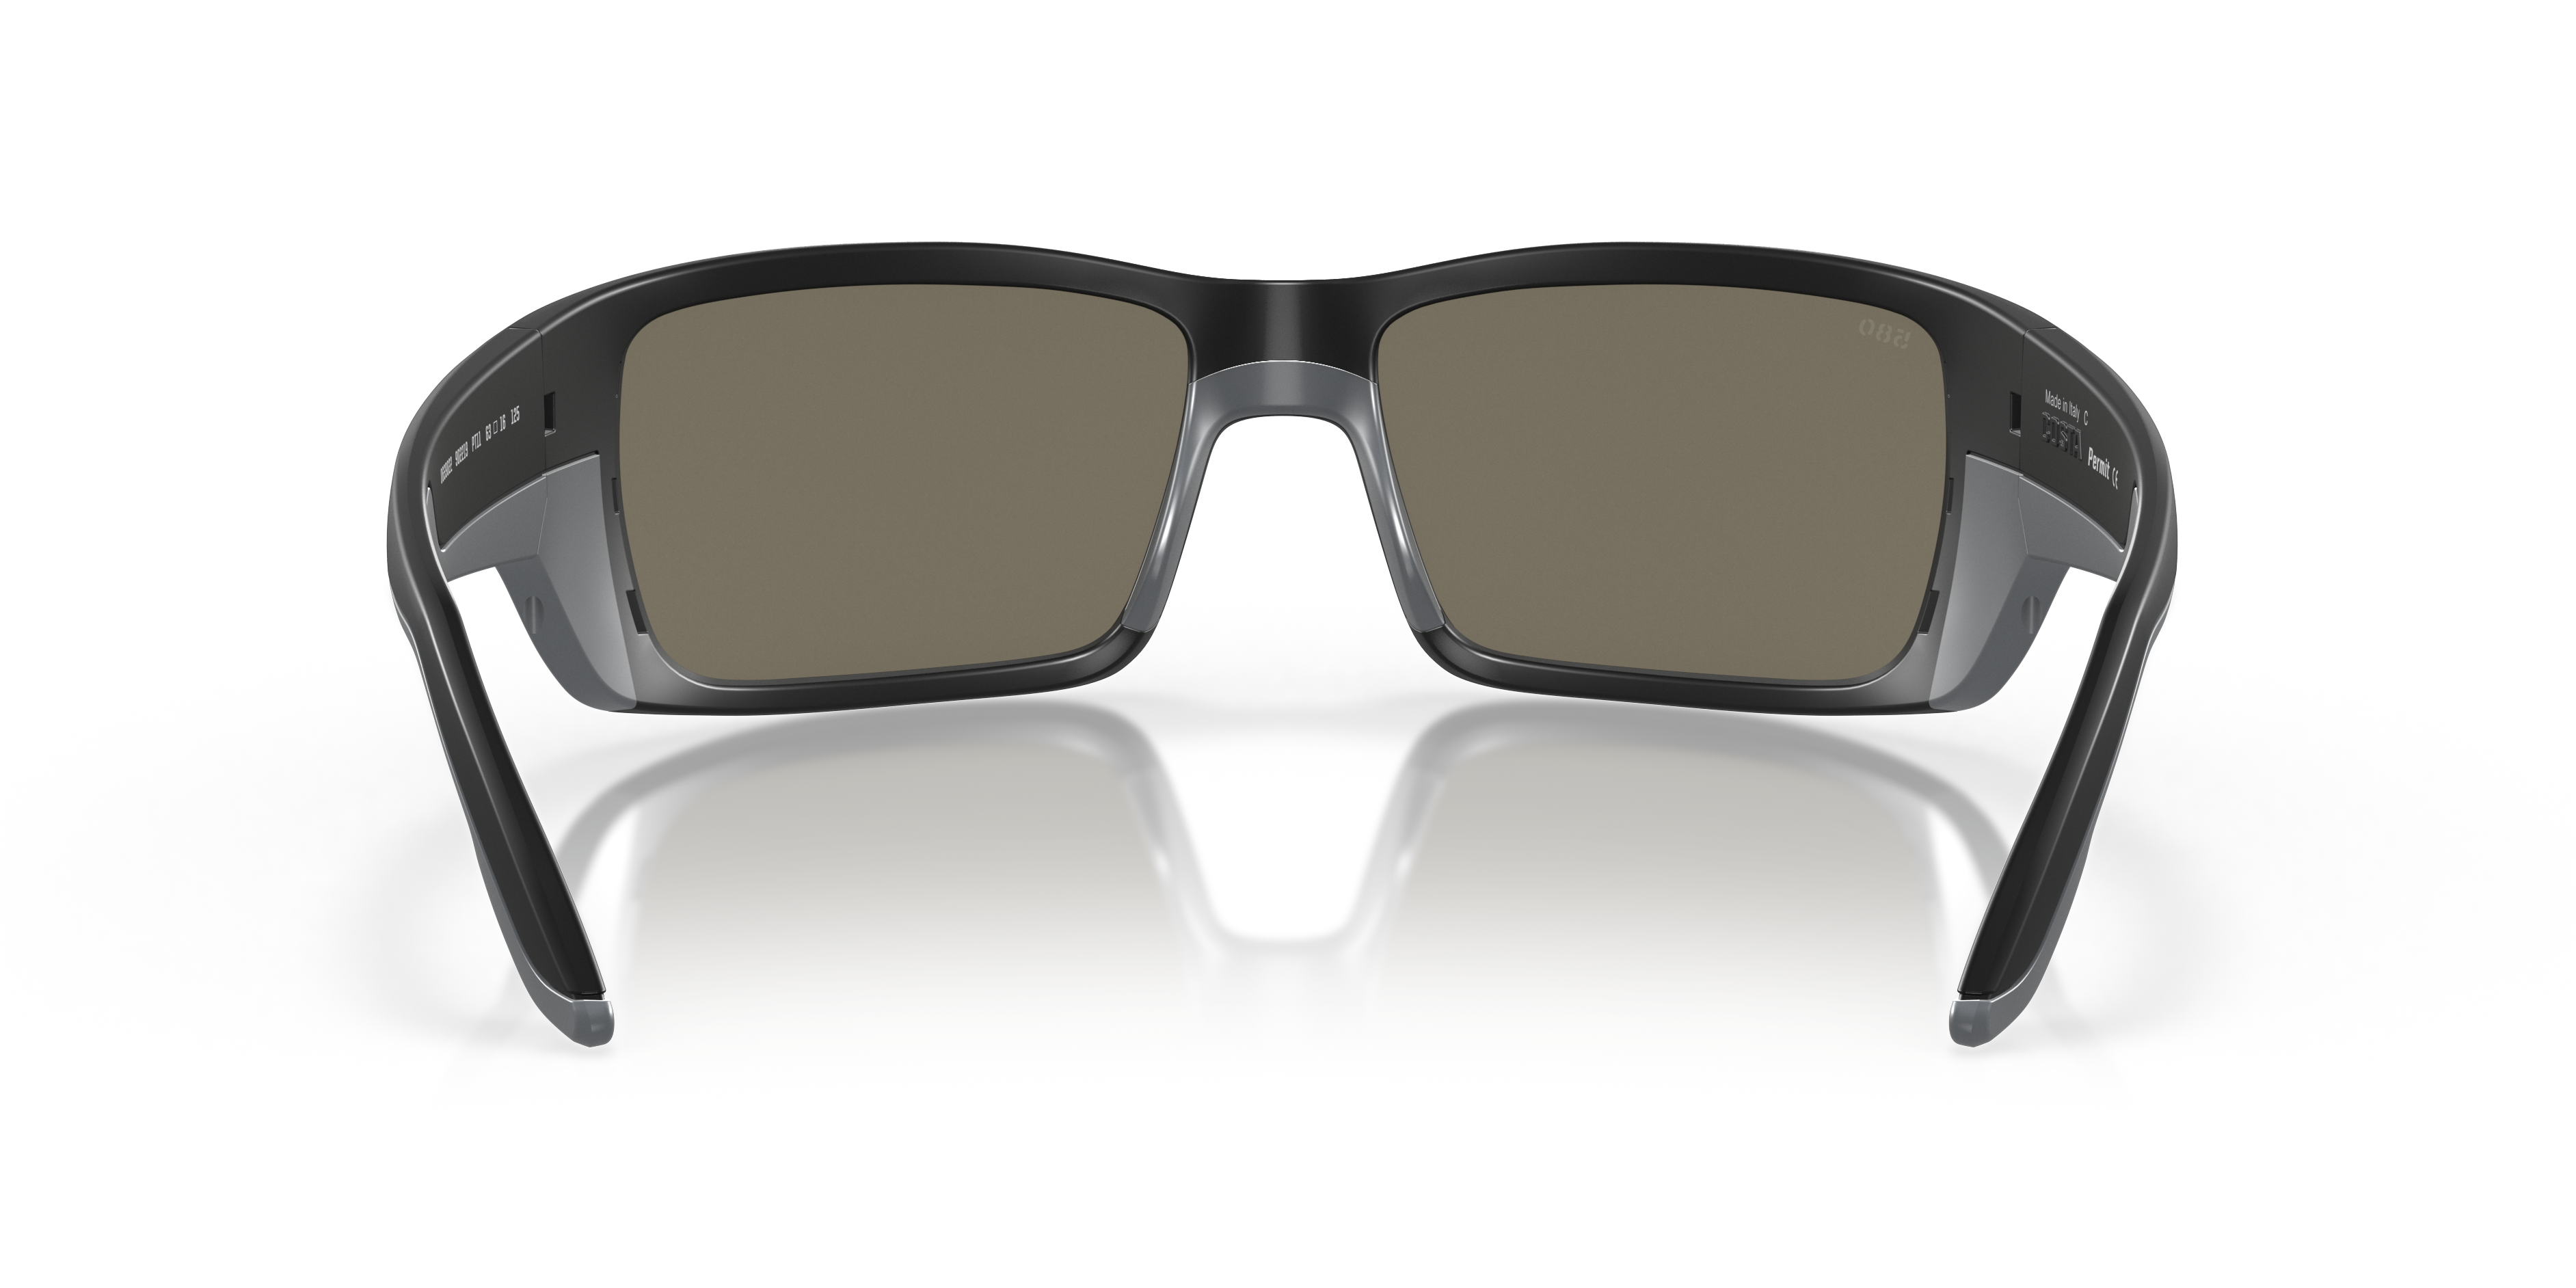 Details about   New Authentic Costa Permit Polarized Wide Fit Sunglasses Matte Black Frame 